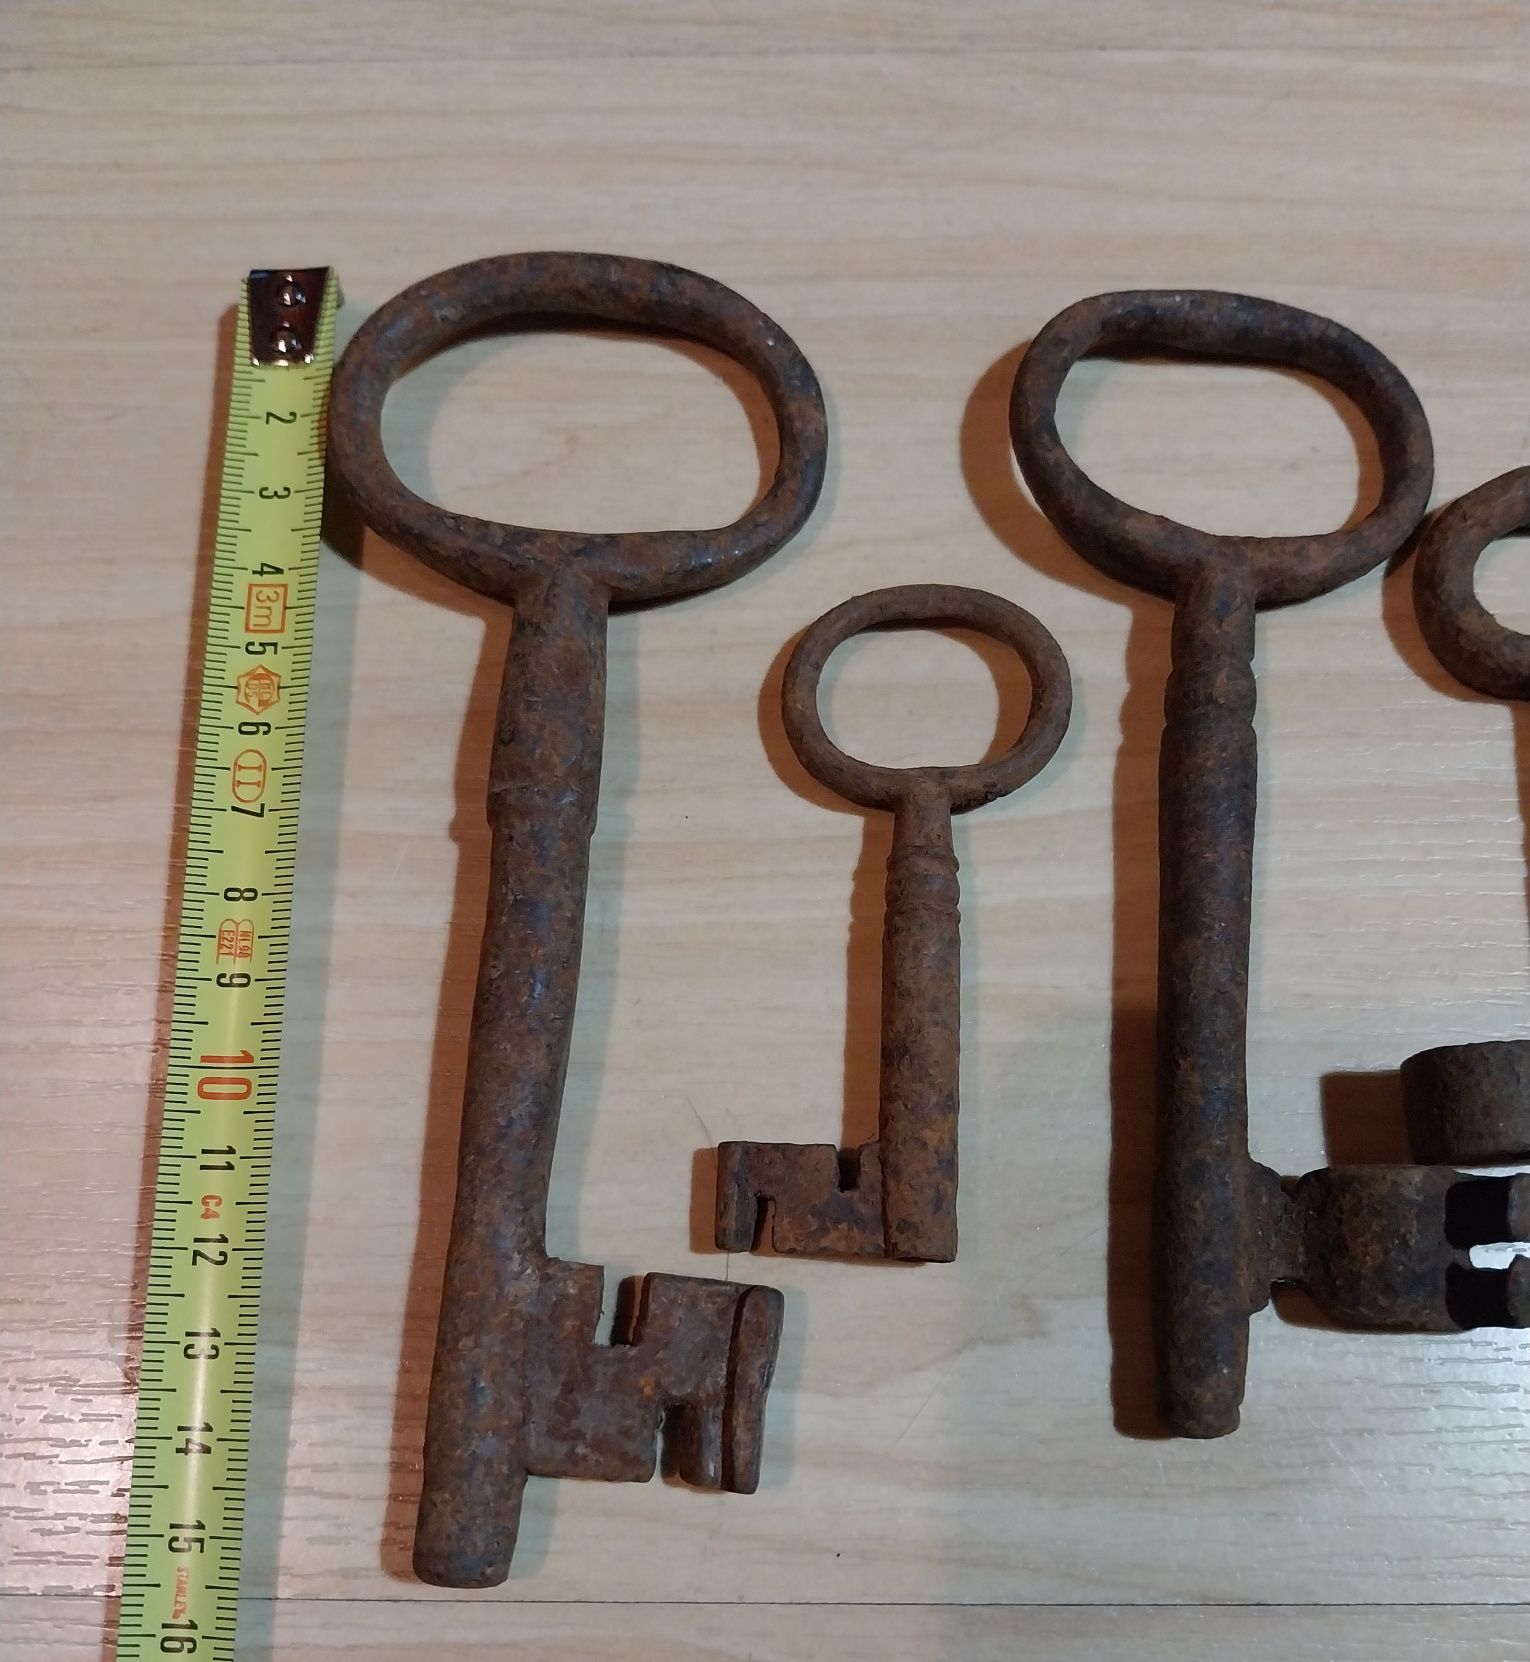 Lote de 4 chaves antigas em ferro